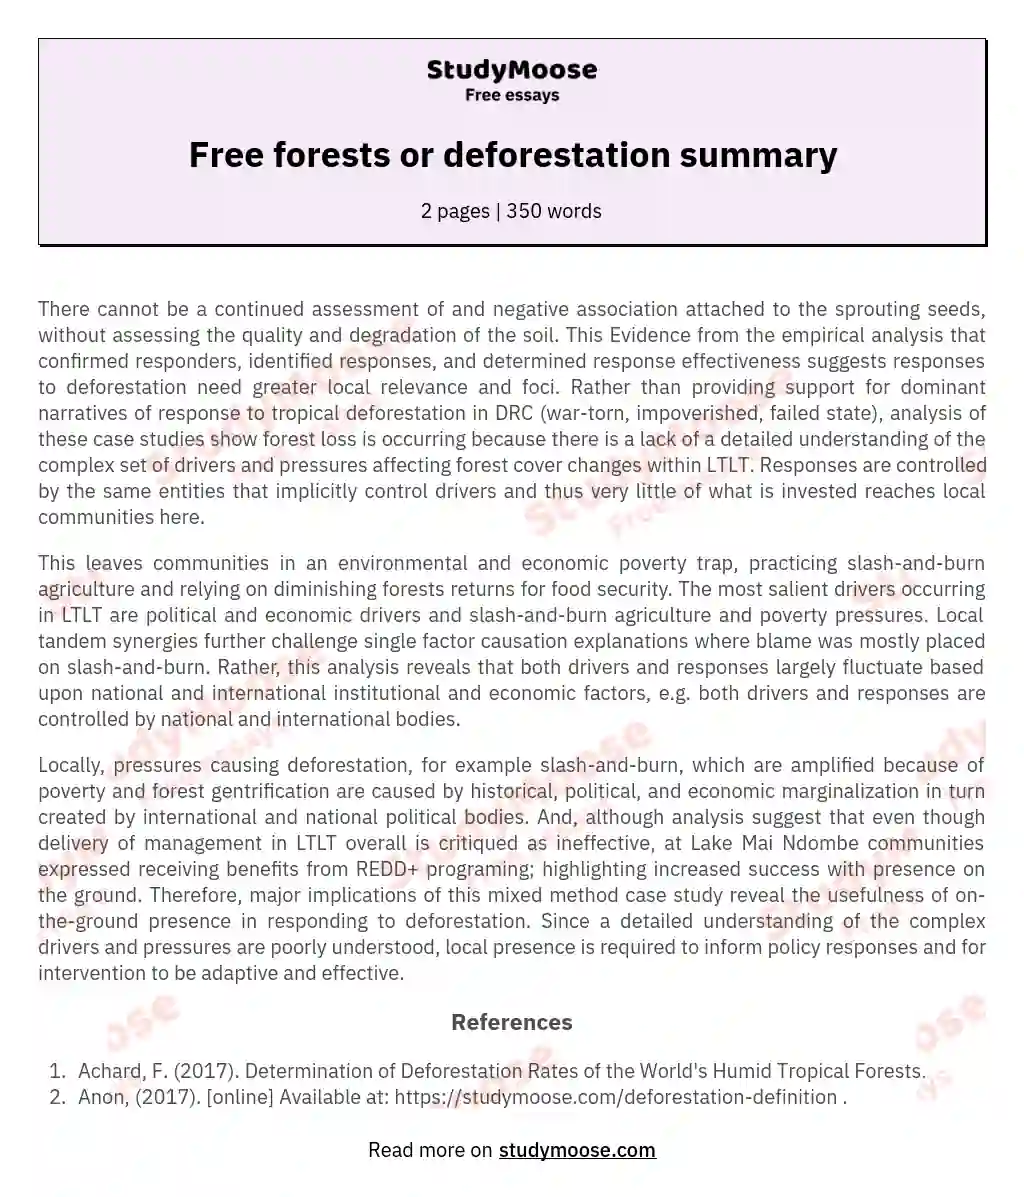 essay of destruction of forest